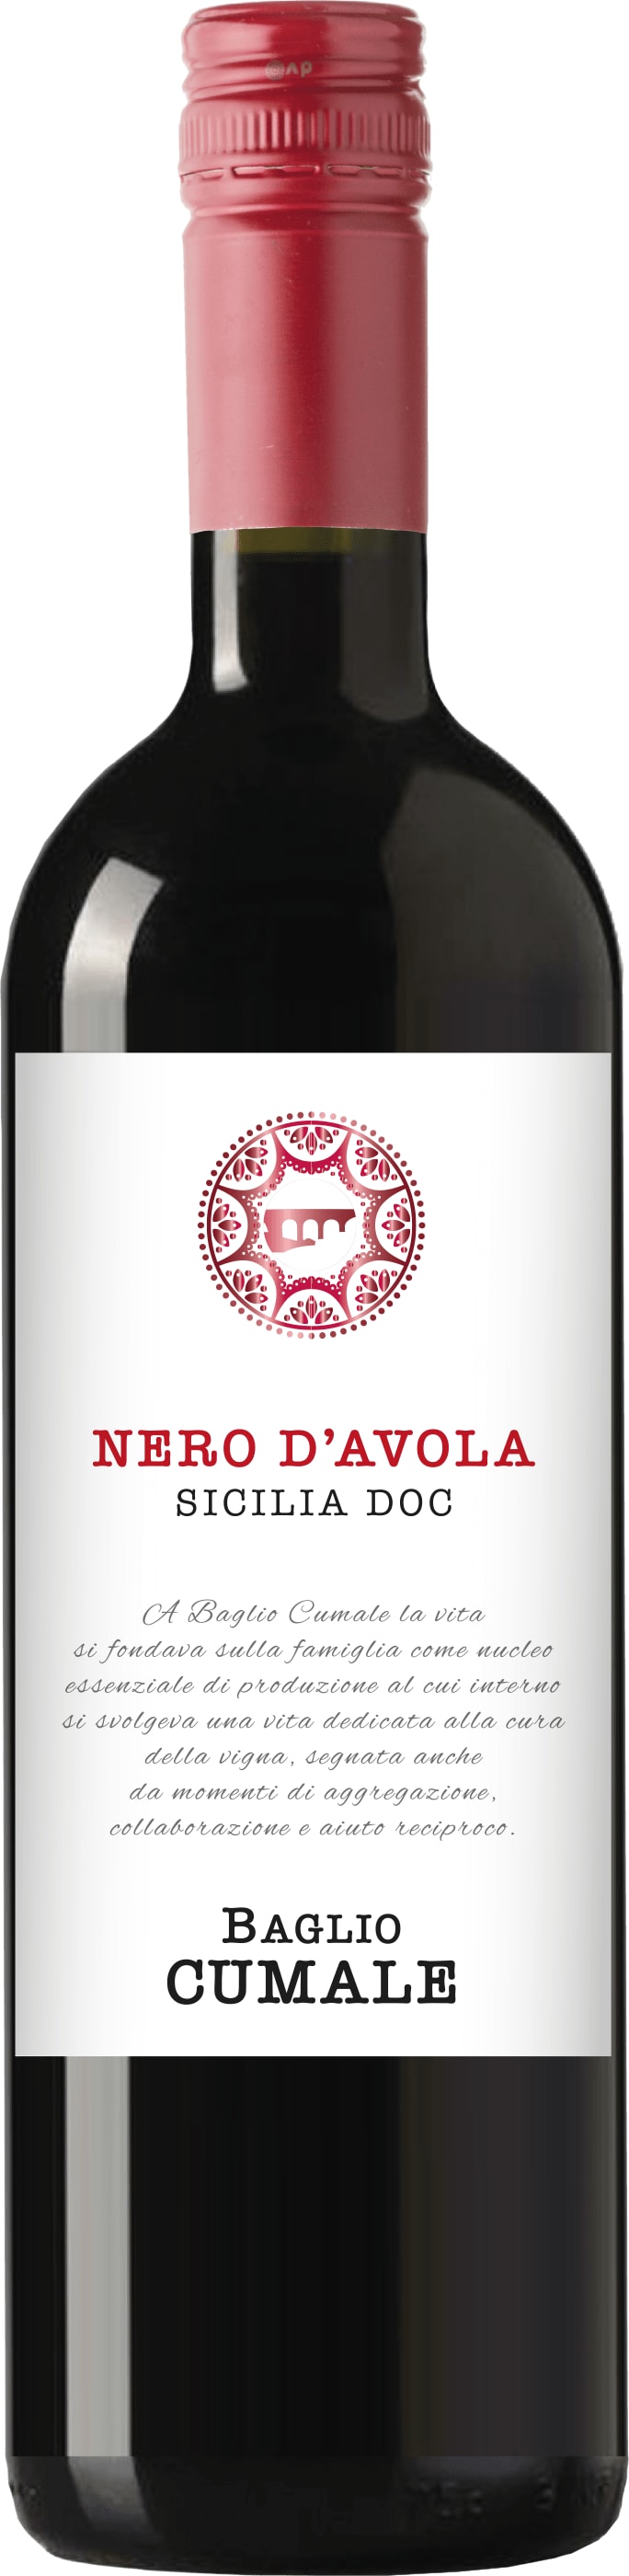 Baglio Cumale Nero d'Avola 22 DOC 75cl - Buy Baglio Cumale Wines from GREAT WINES DIRECT wine shop